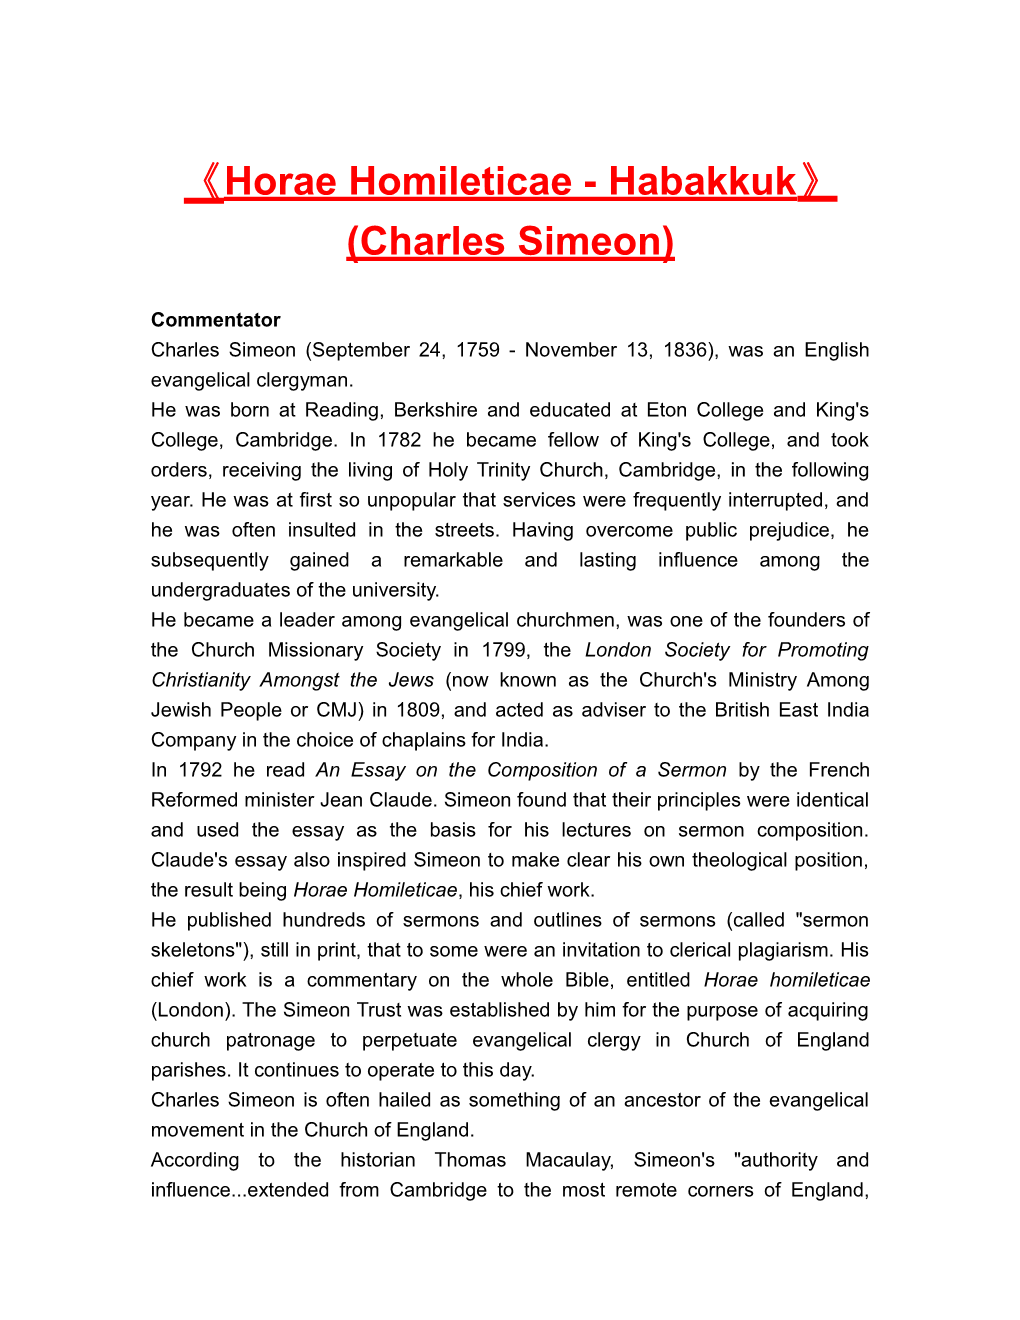 Horae Homileticae - Habakkuk (Charles Simeon)